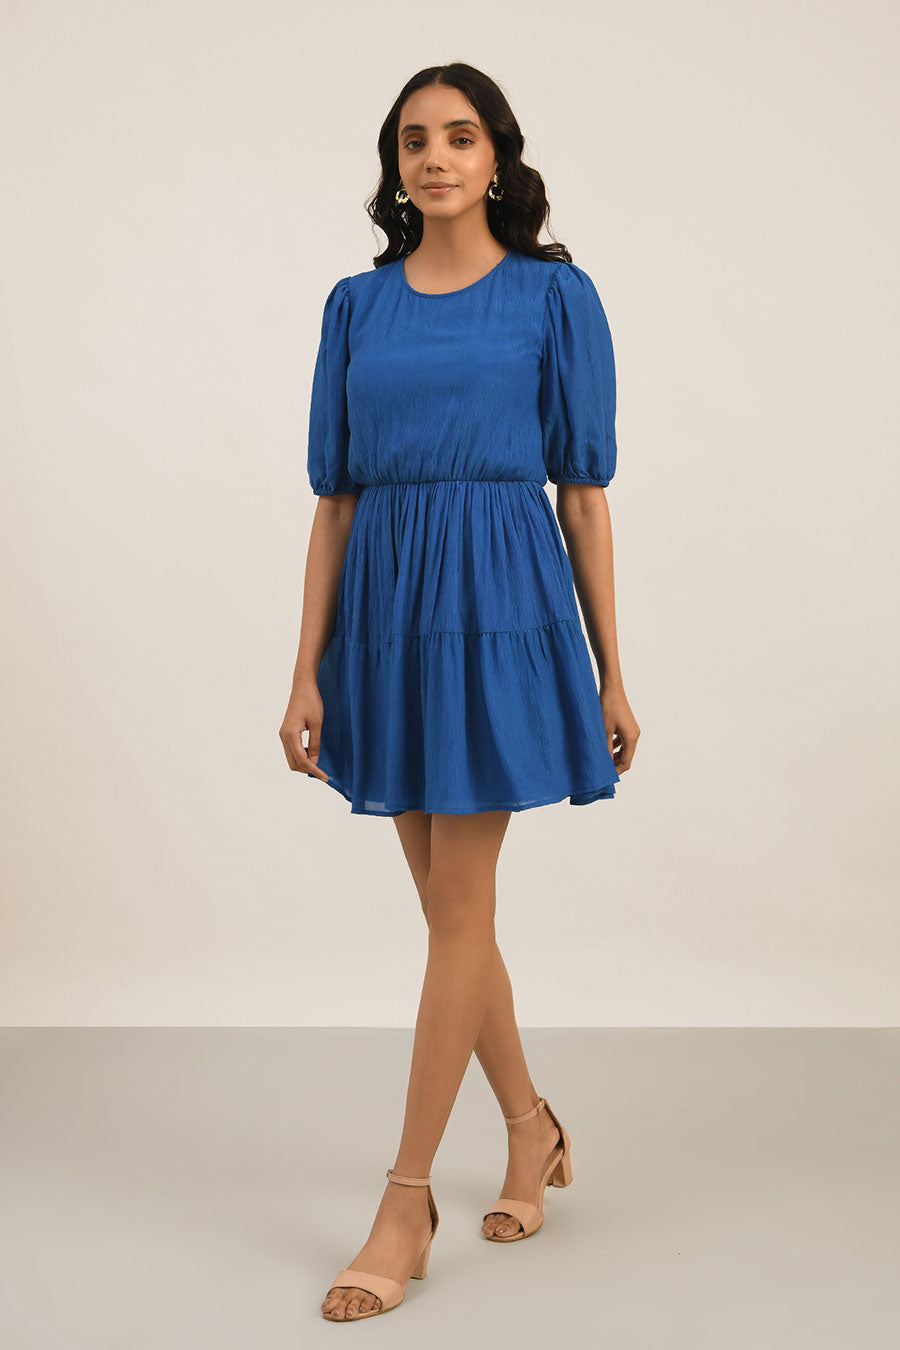 Blue Tier Dress